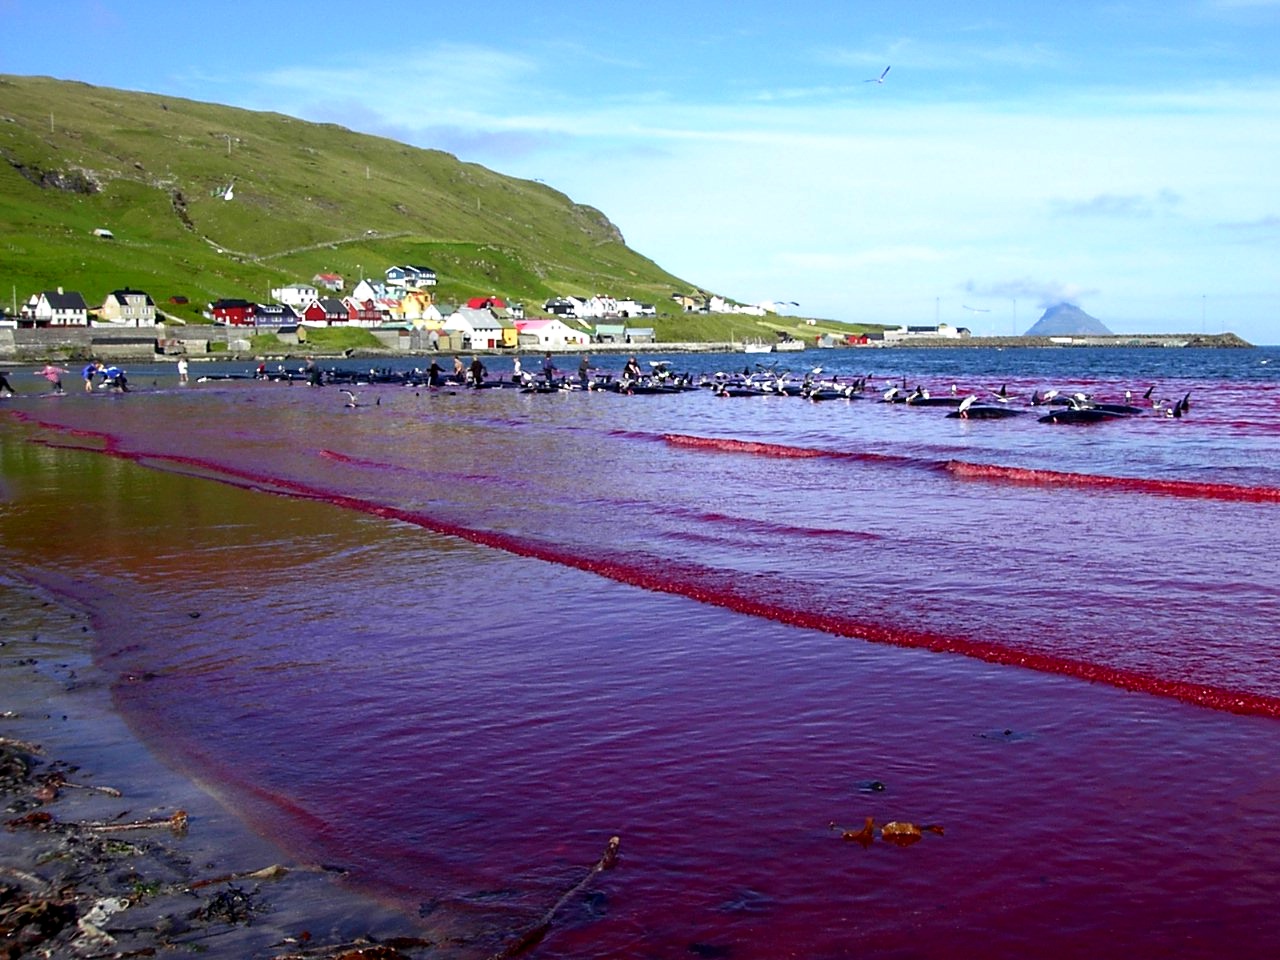 whale hunting the tough way Hvalba_beach_whaling,_Faroe_Islands